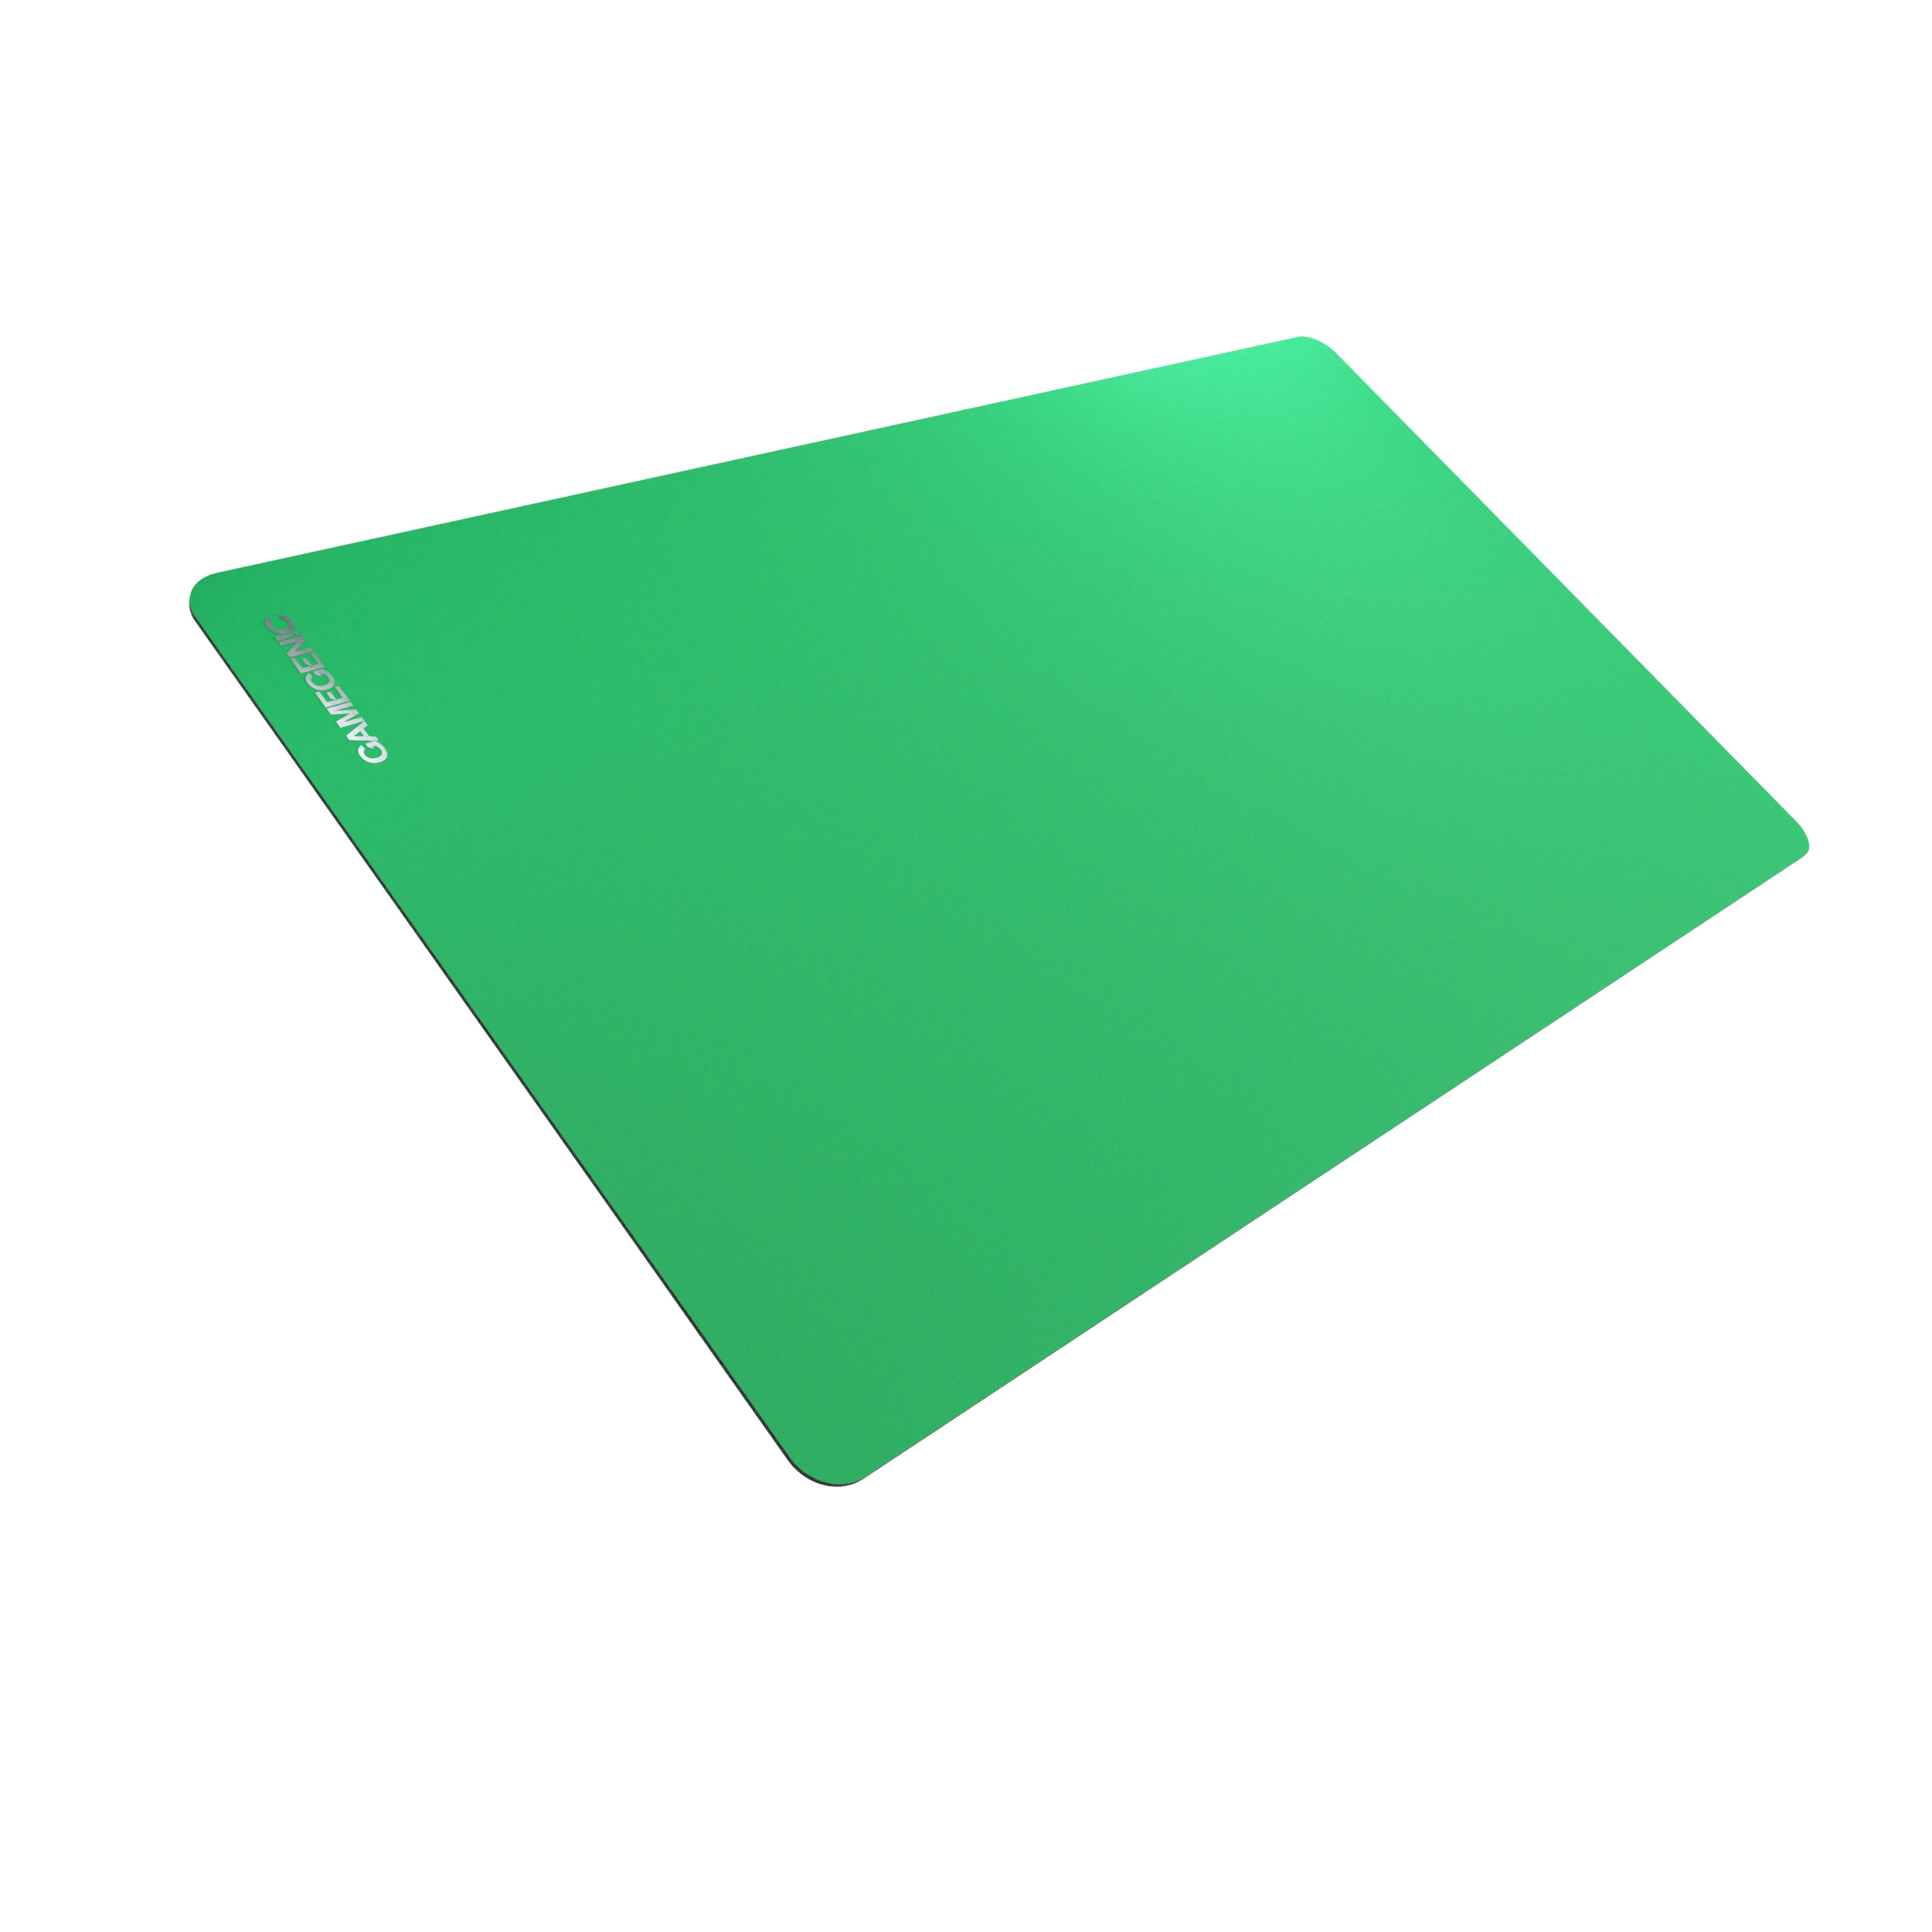 Playmat: Prime 2mm Green